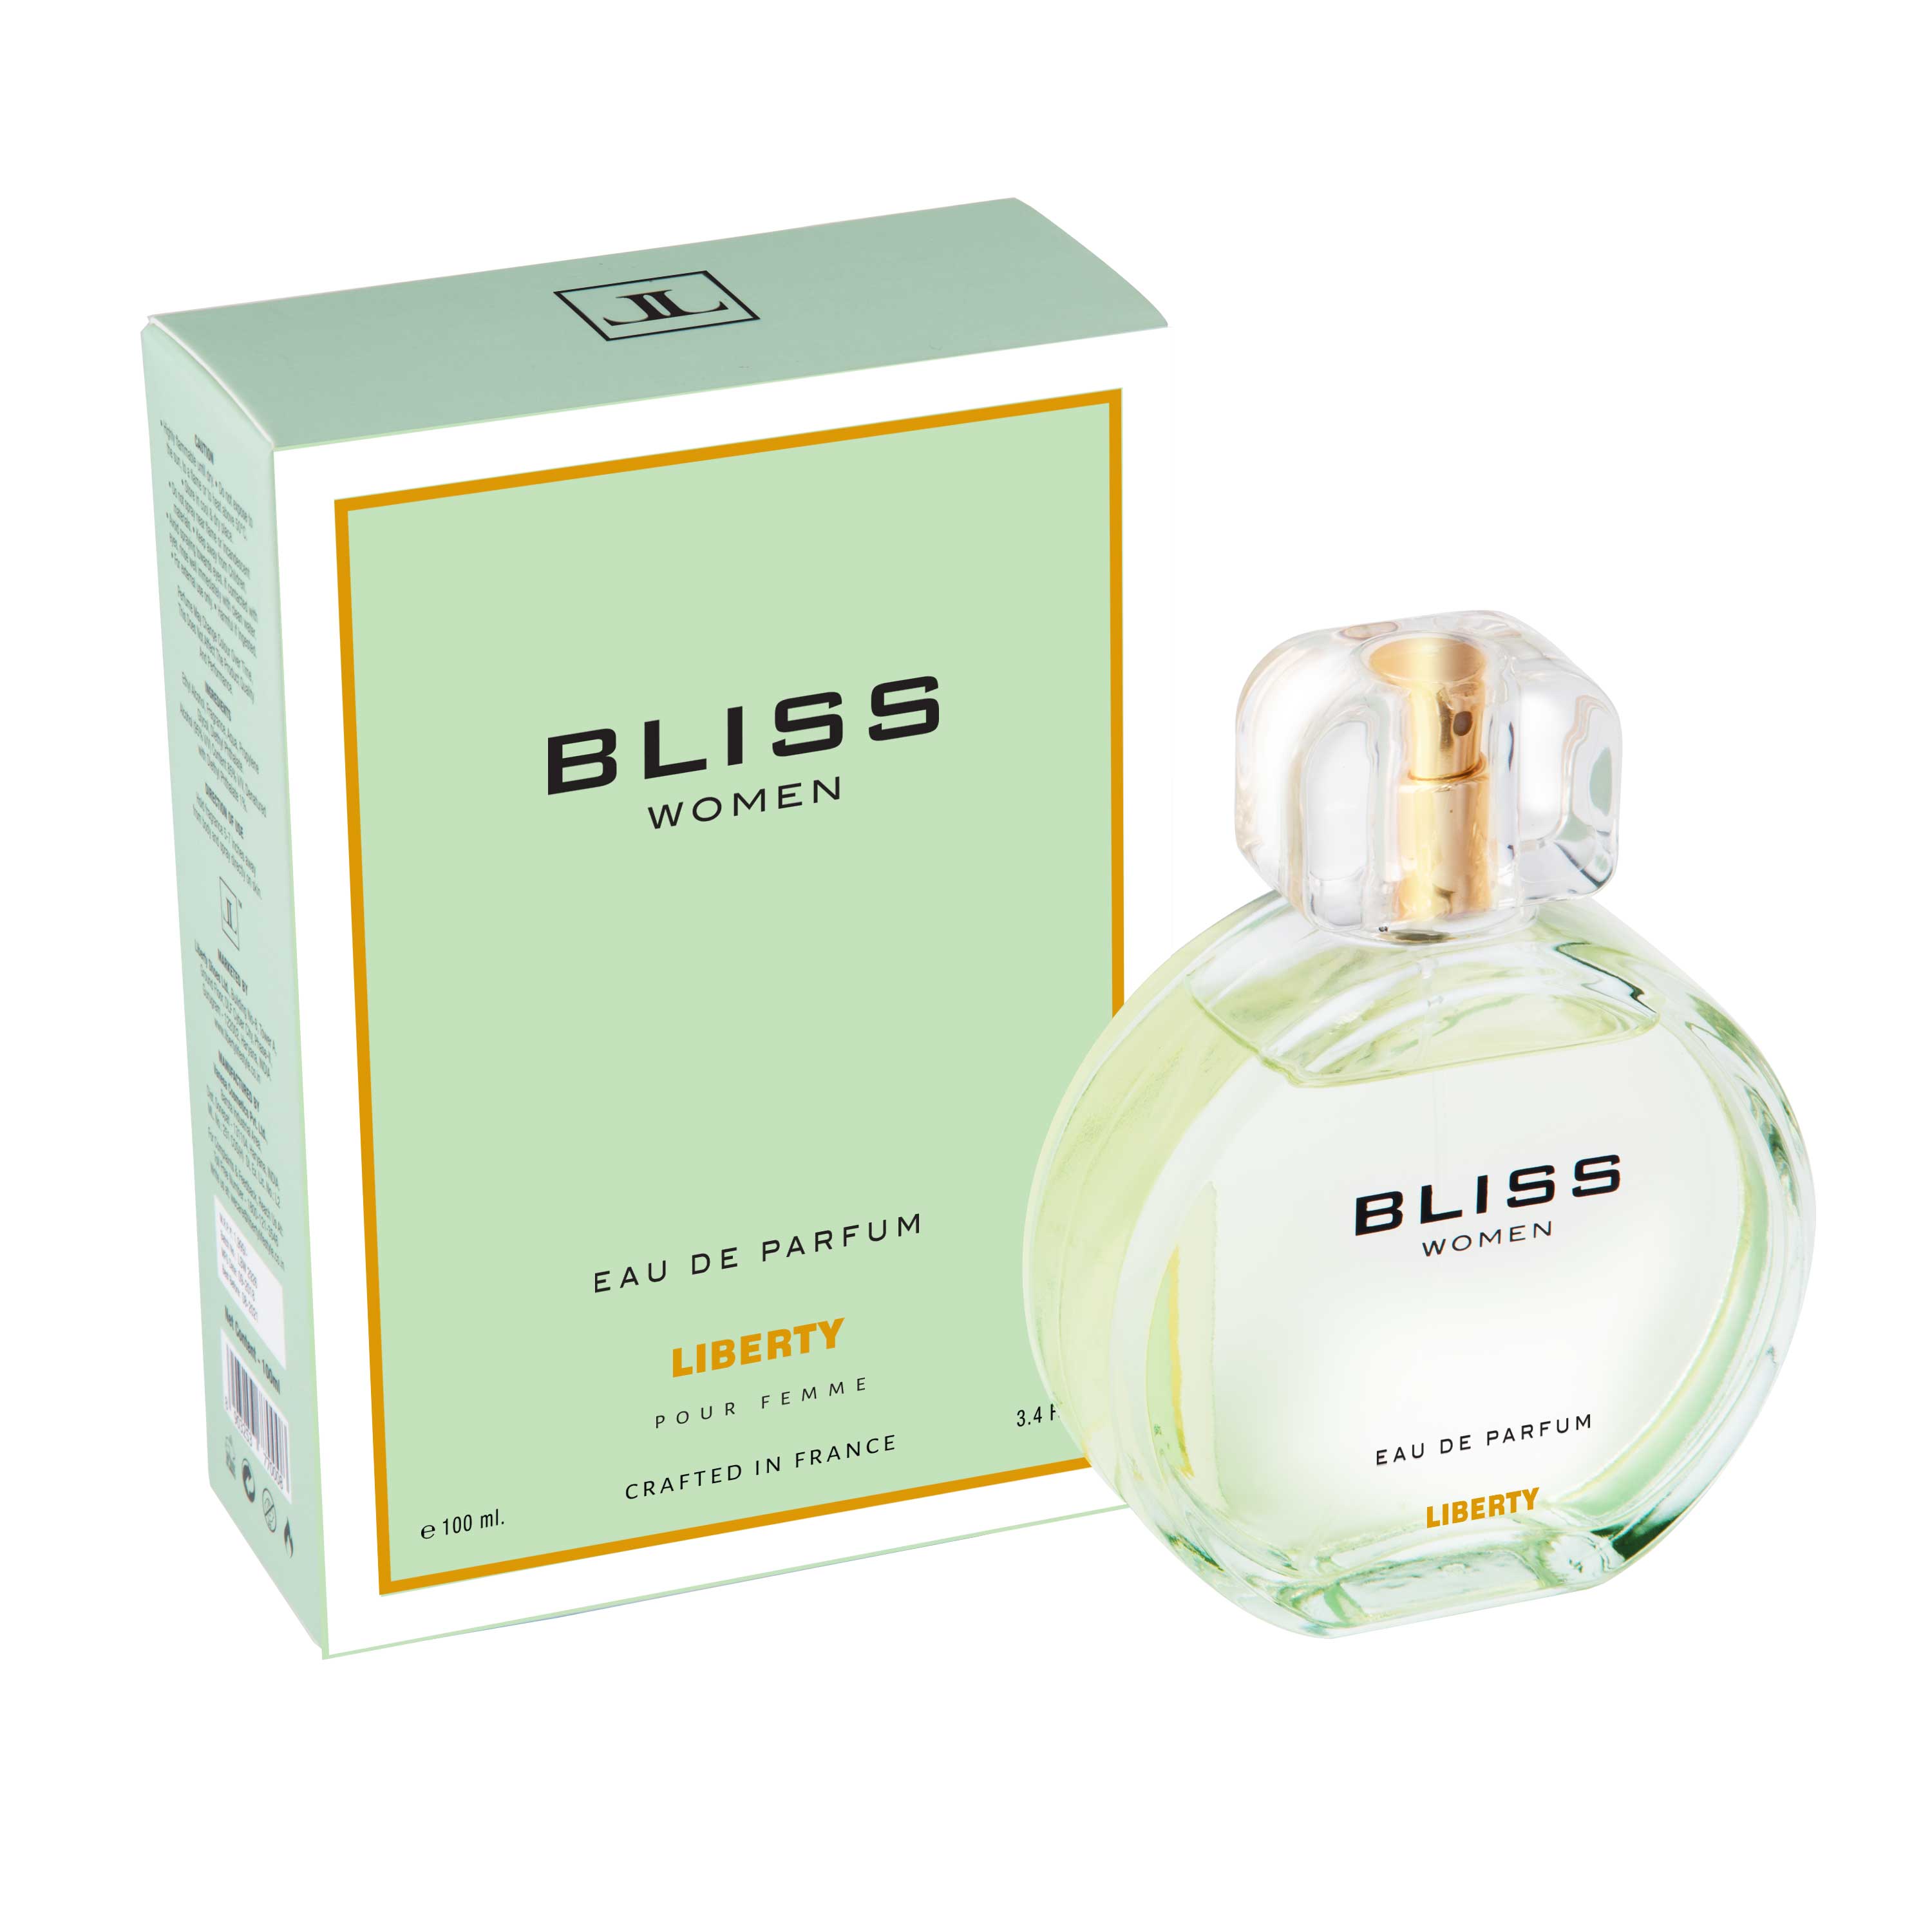 BLISS WOMEN - Eau De Perfume from LIBERTY LIFESTYLE